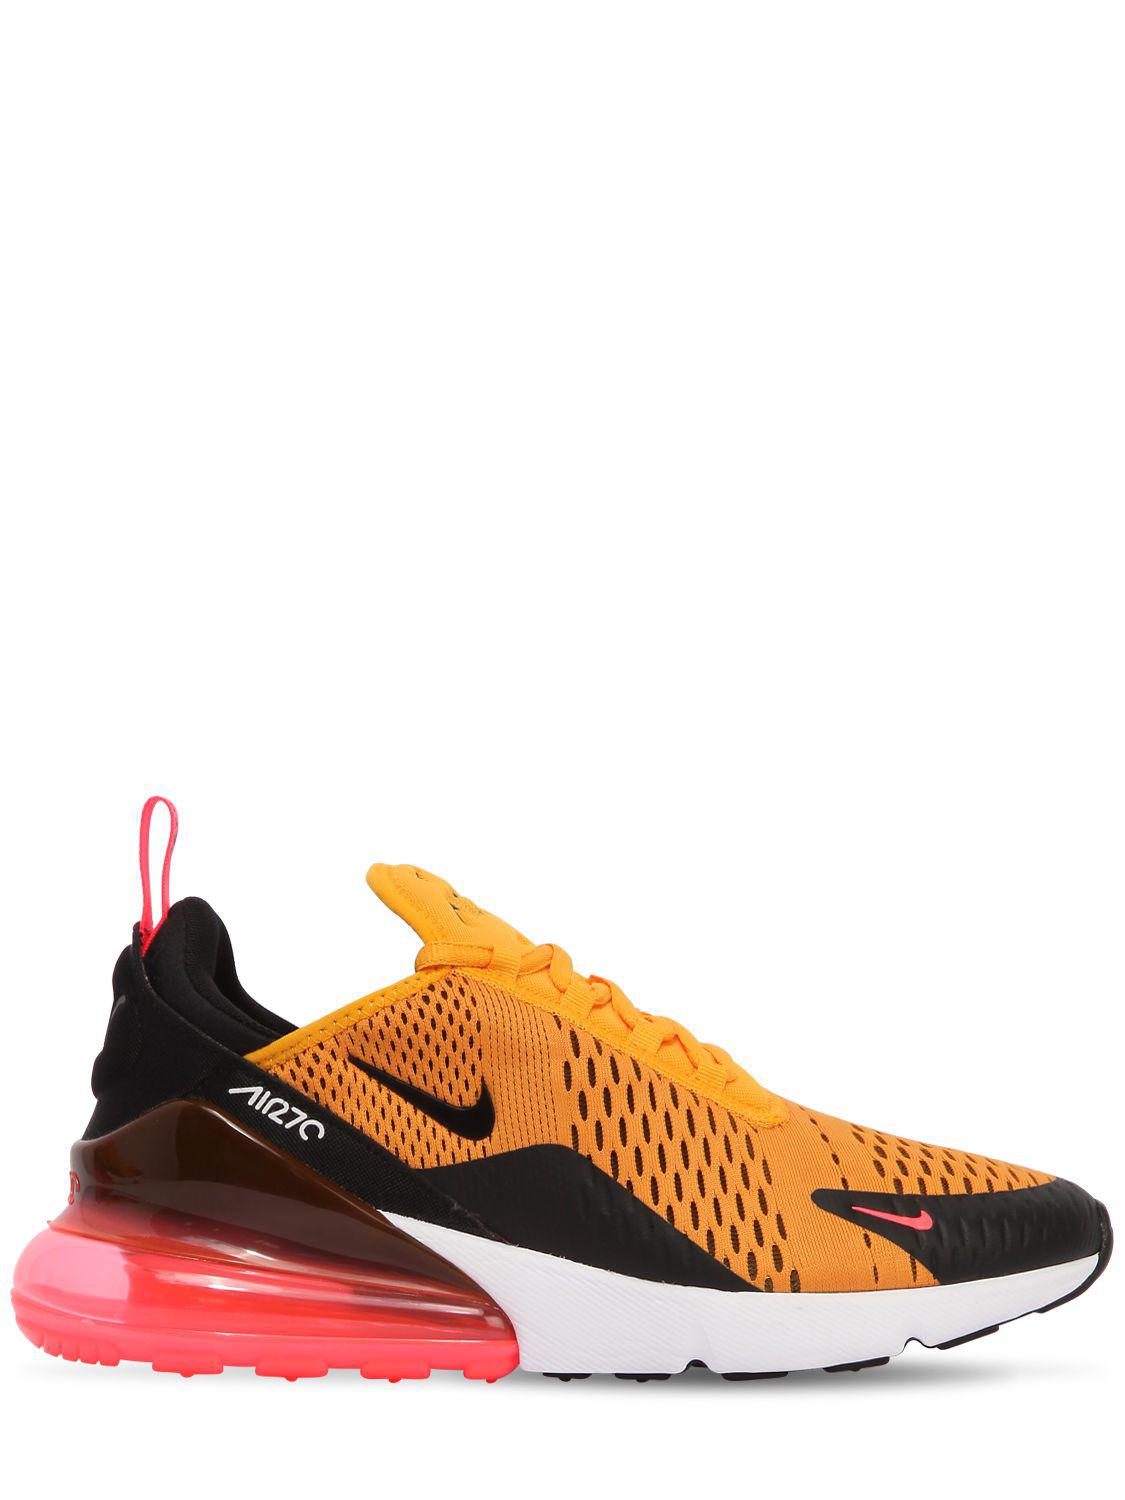 Nike Air Max 270 Neoprene Sneakers in Orange for Men - Lyst